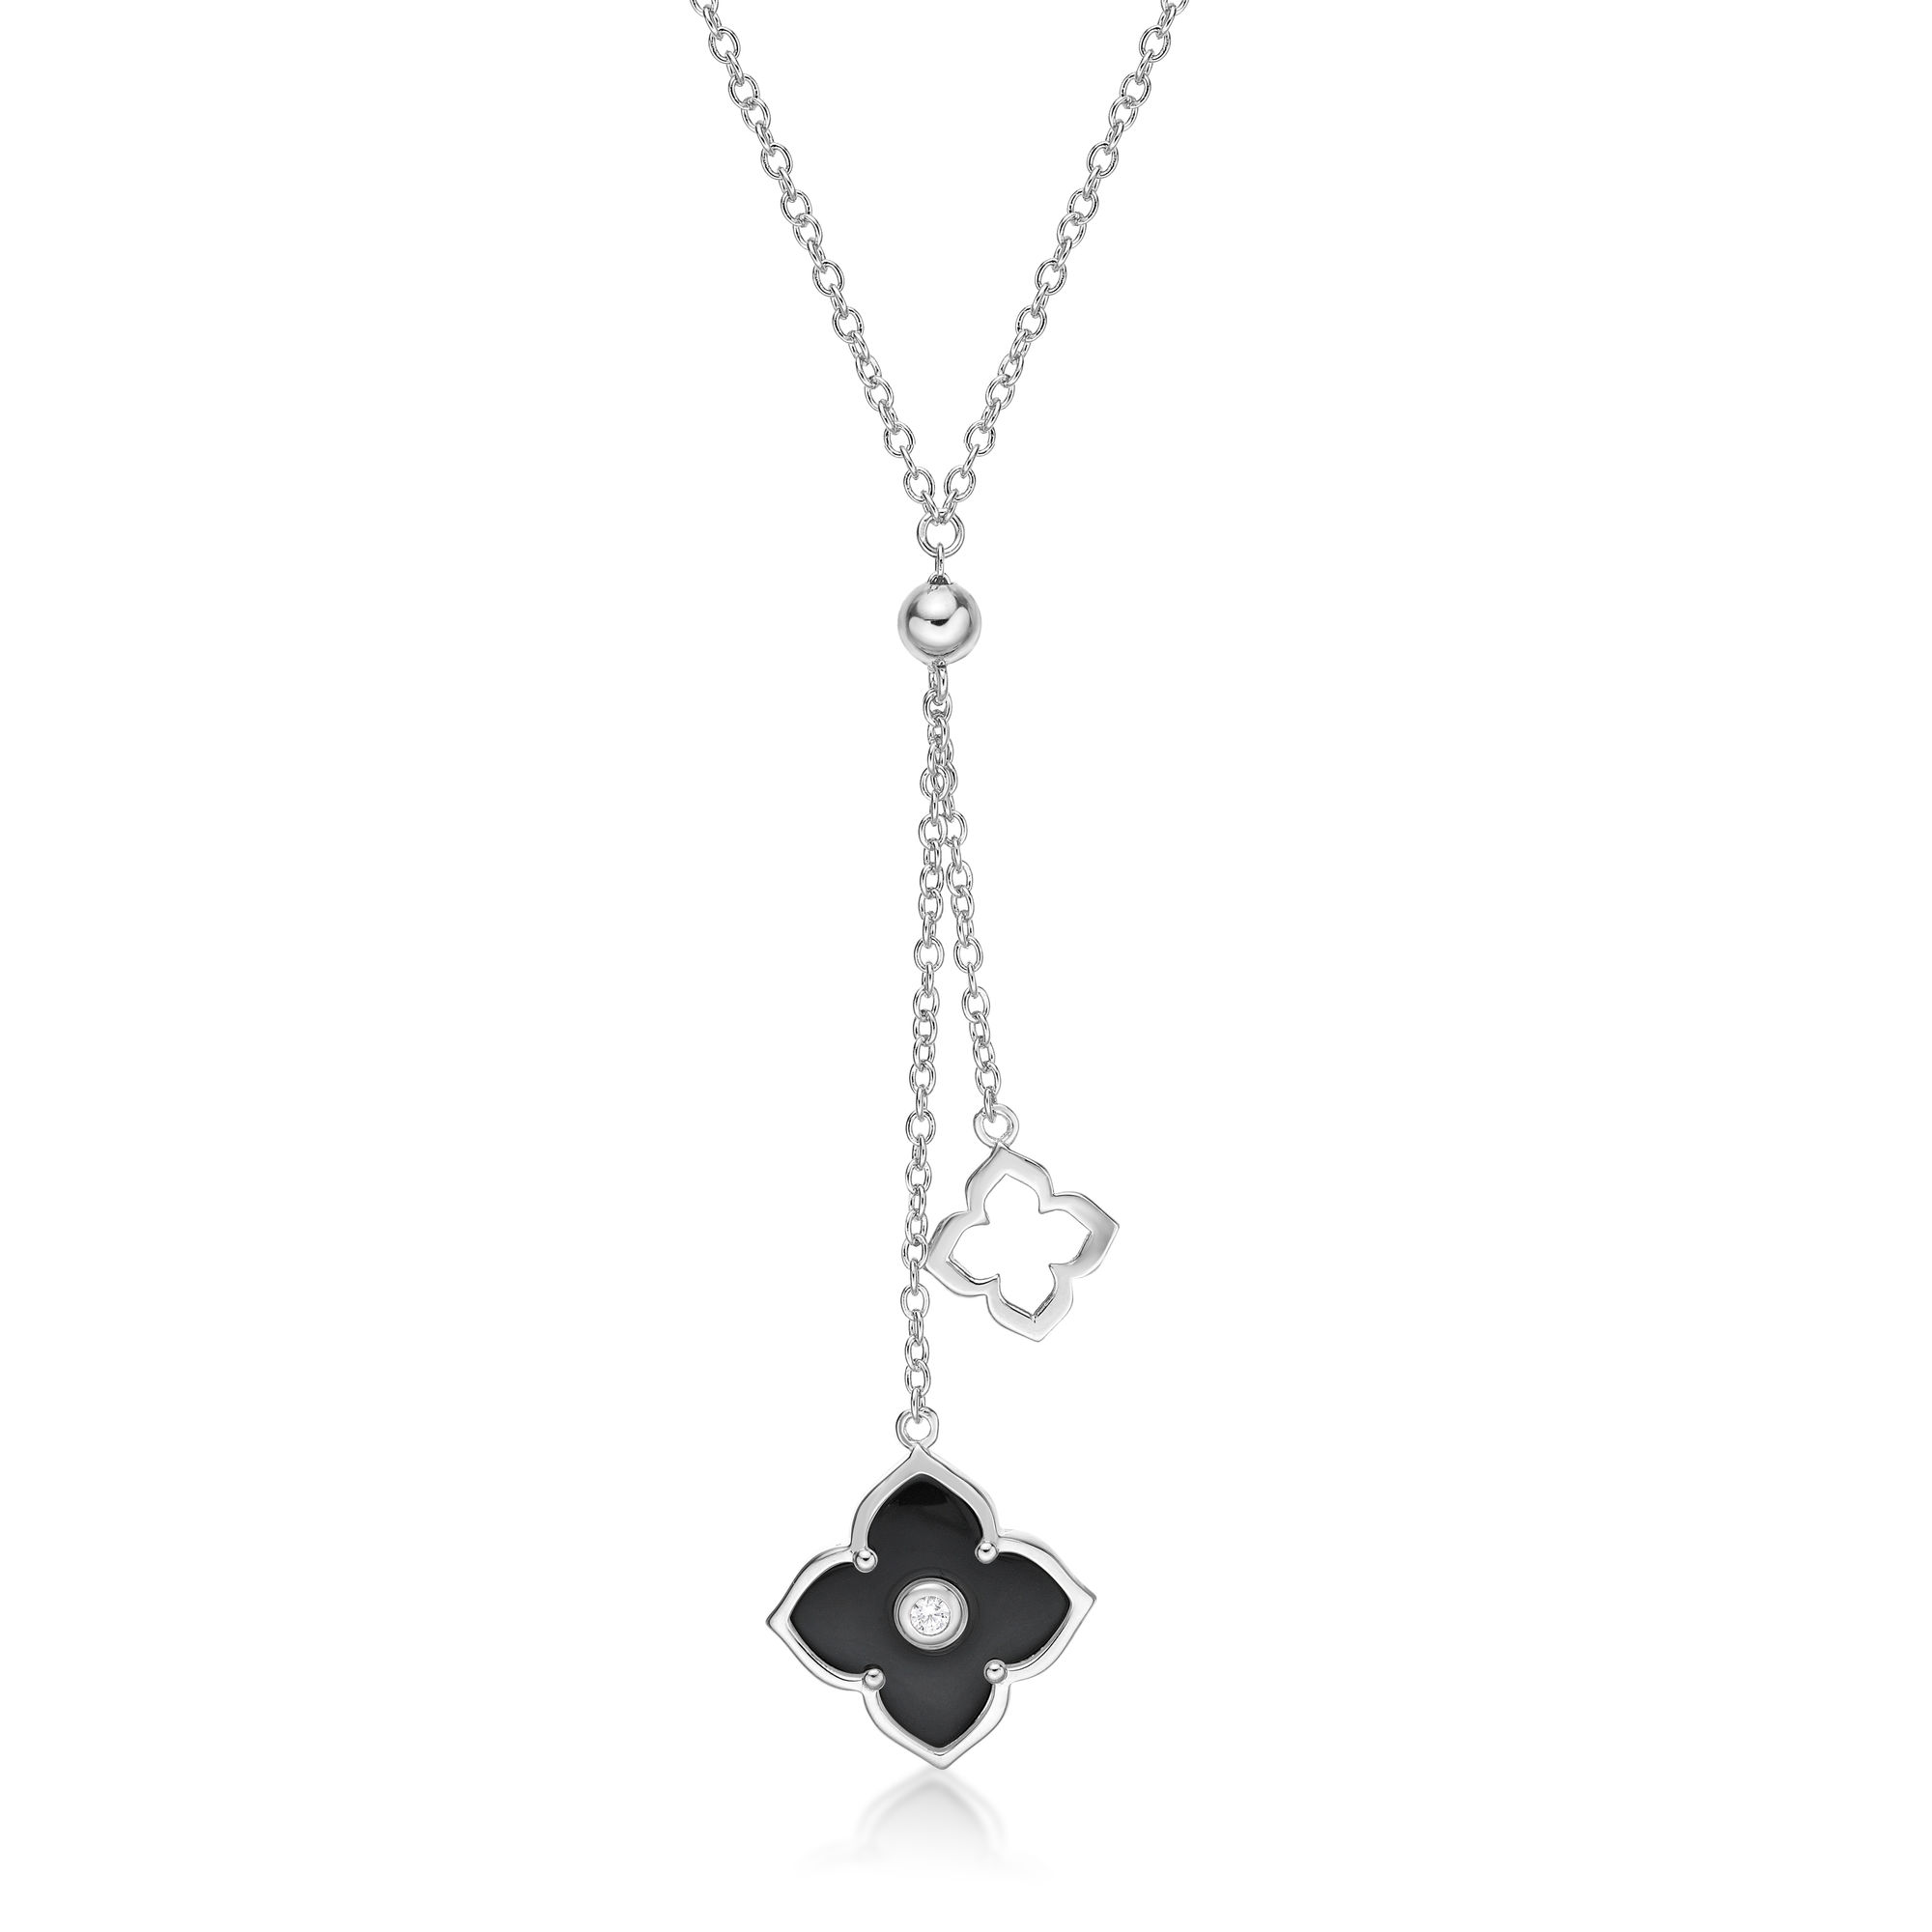 1-48635-necklace-c-z-silver-2-1.jpg